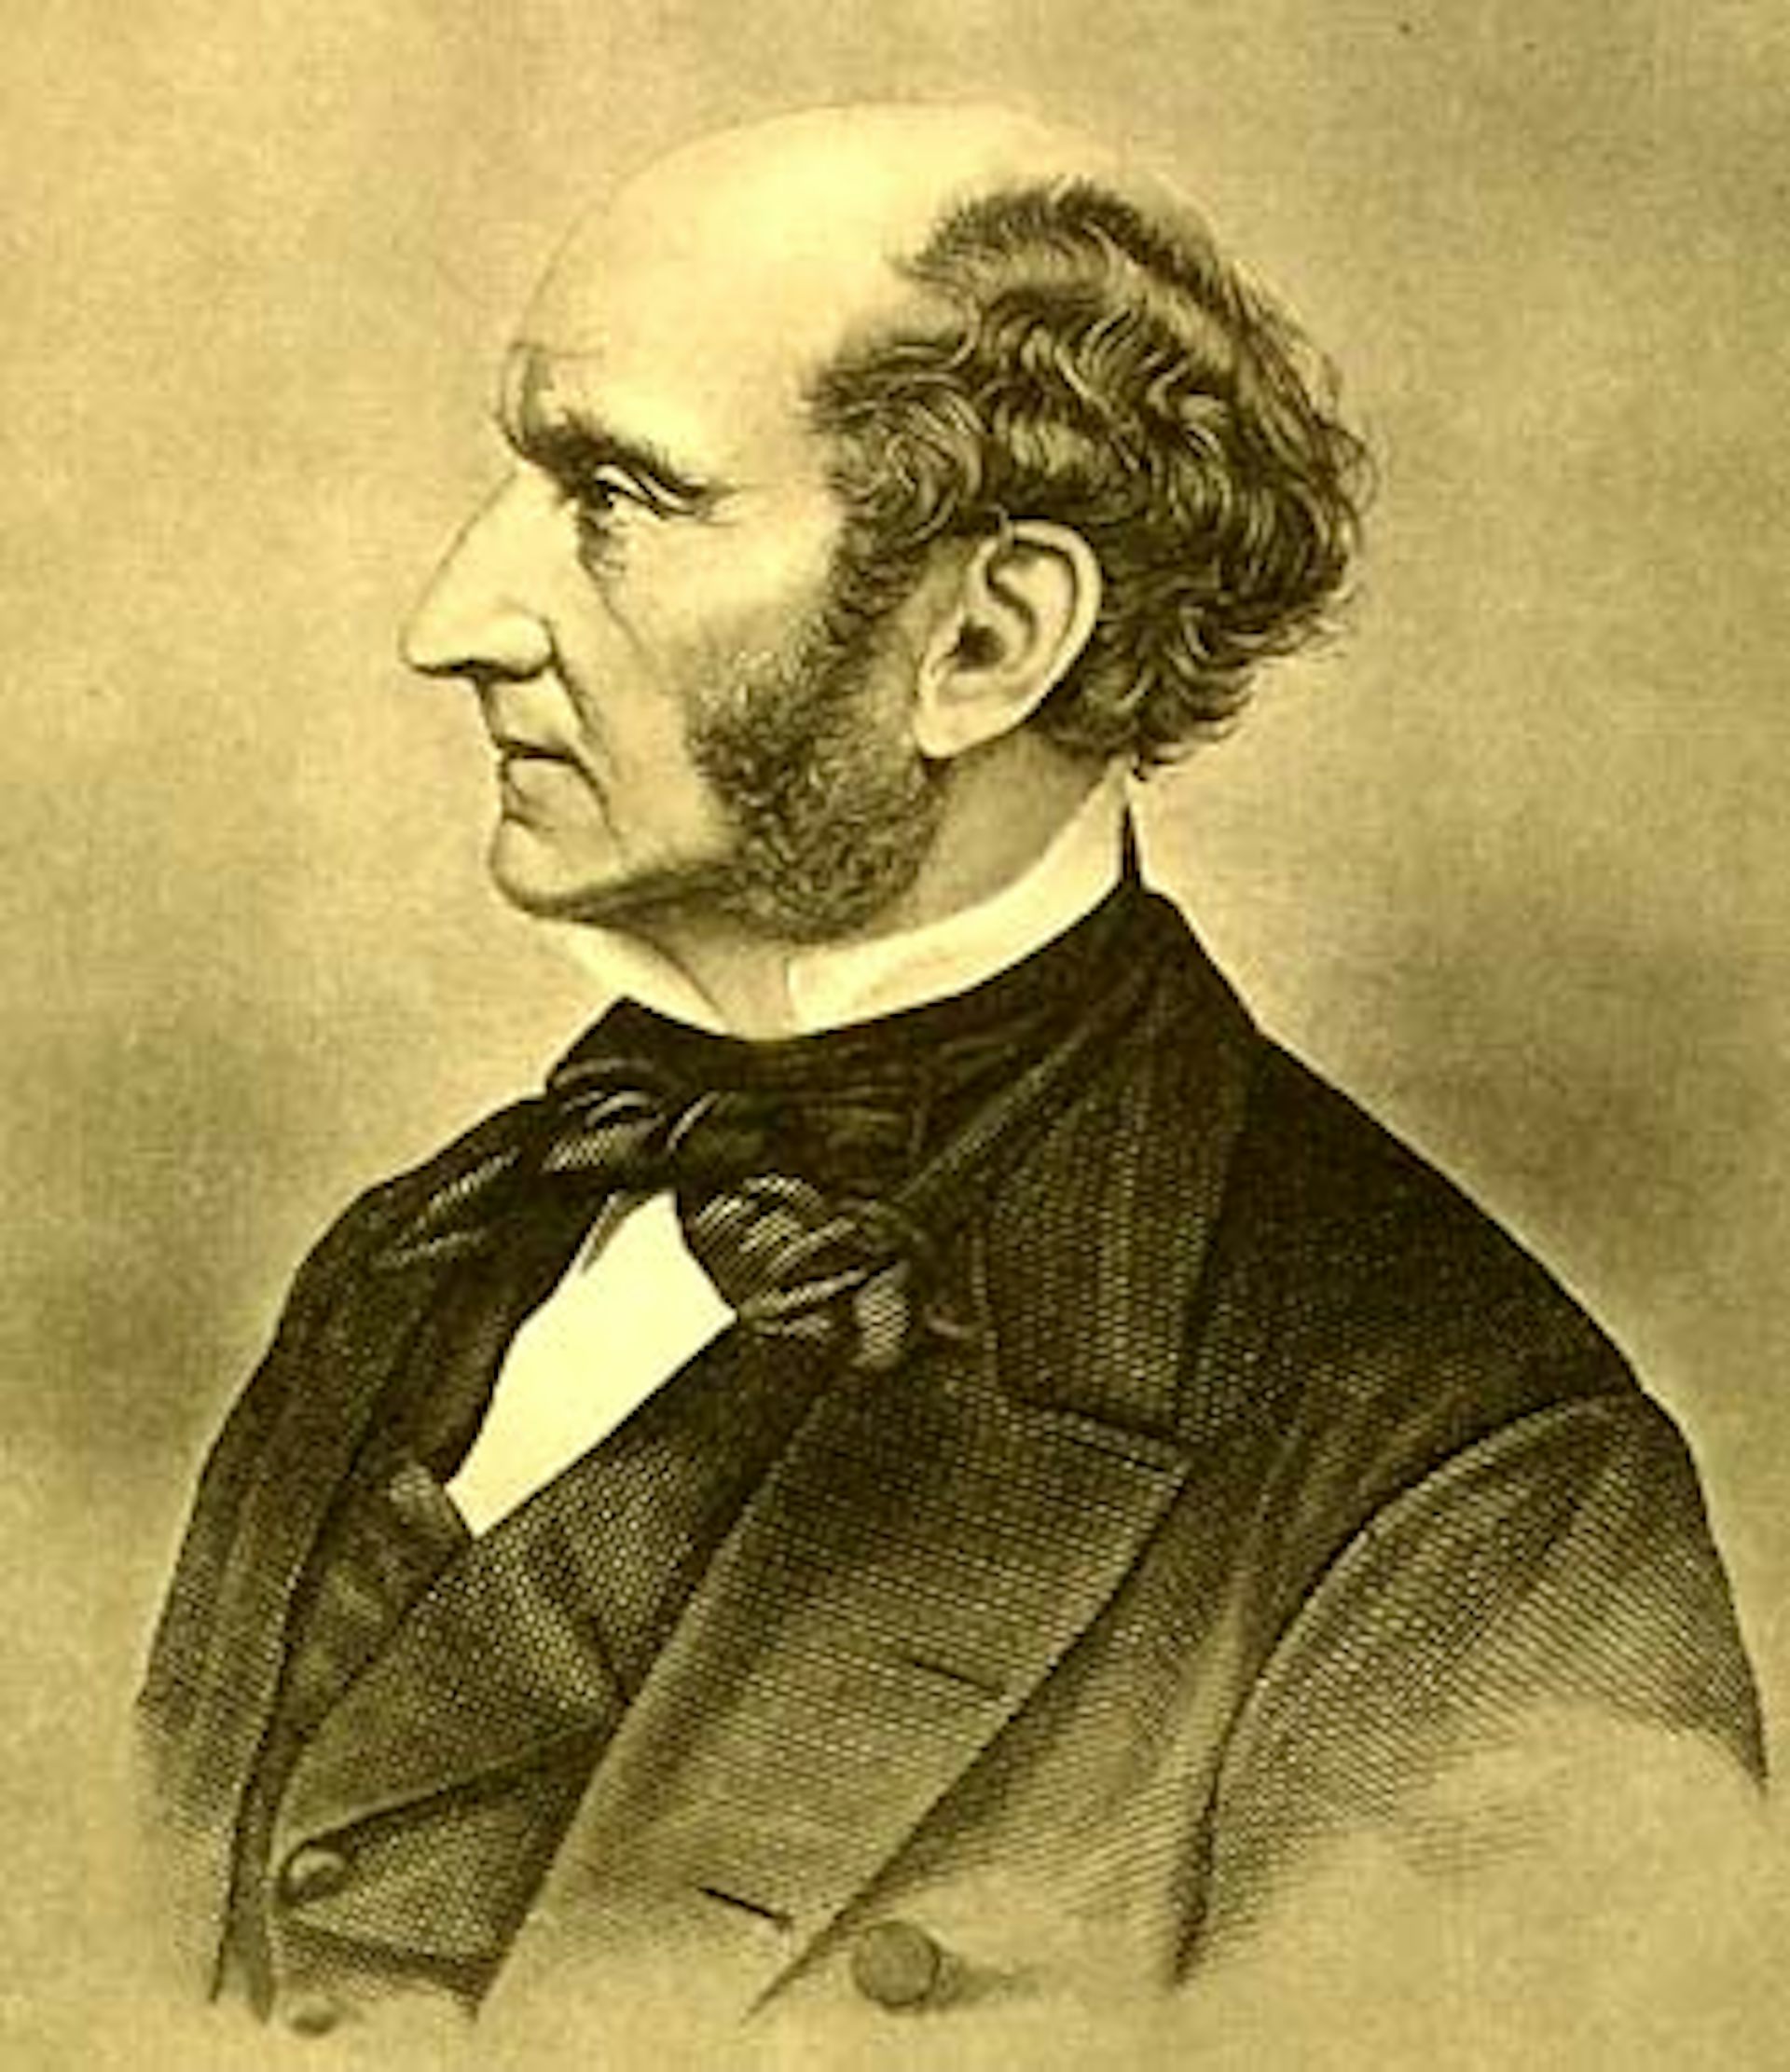 John Stuart Mill's marginalia tells us much about the great